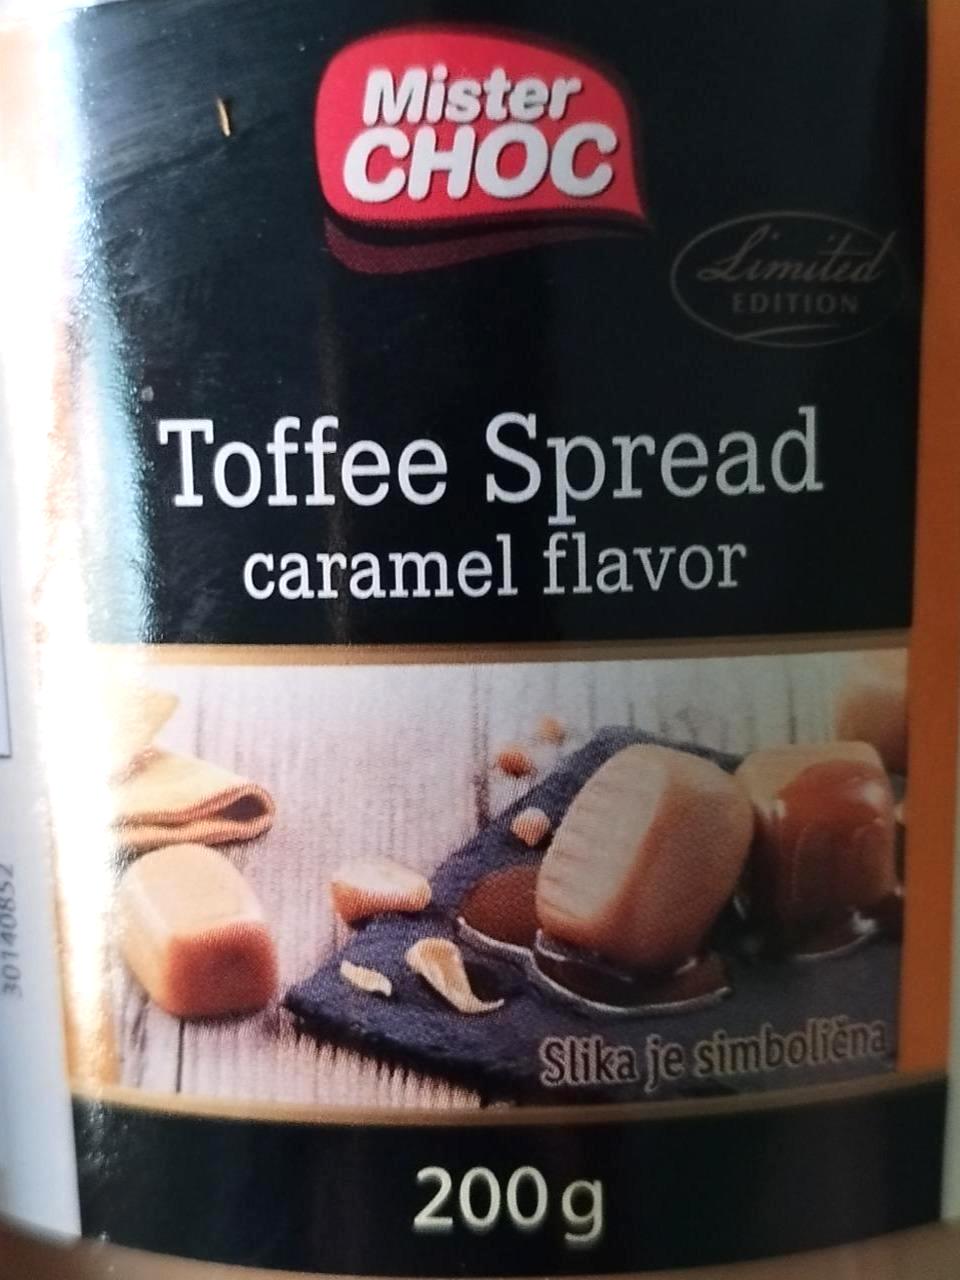 Képek - Toffee Spread caramel flavor Mister Choc